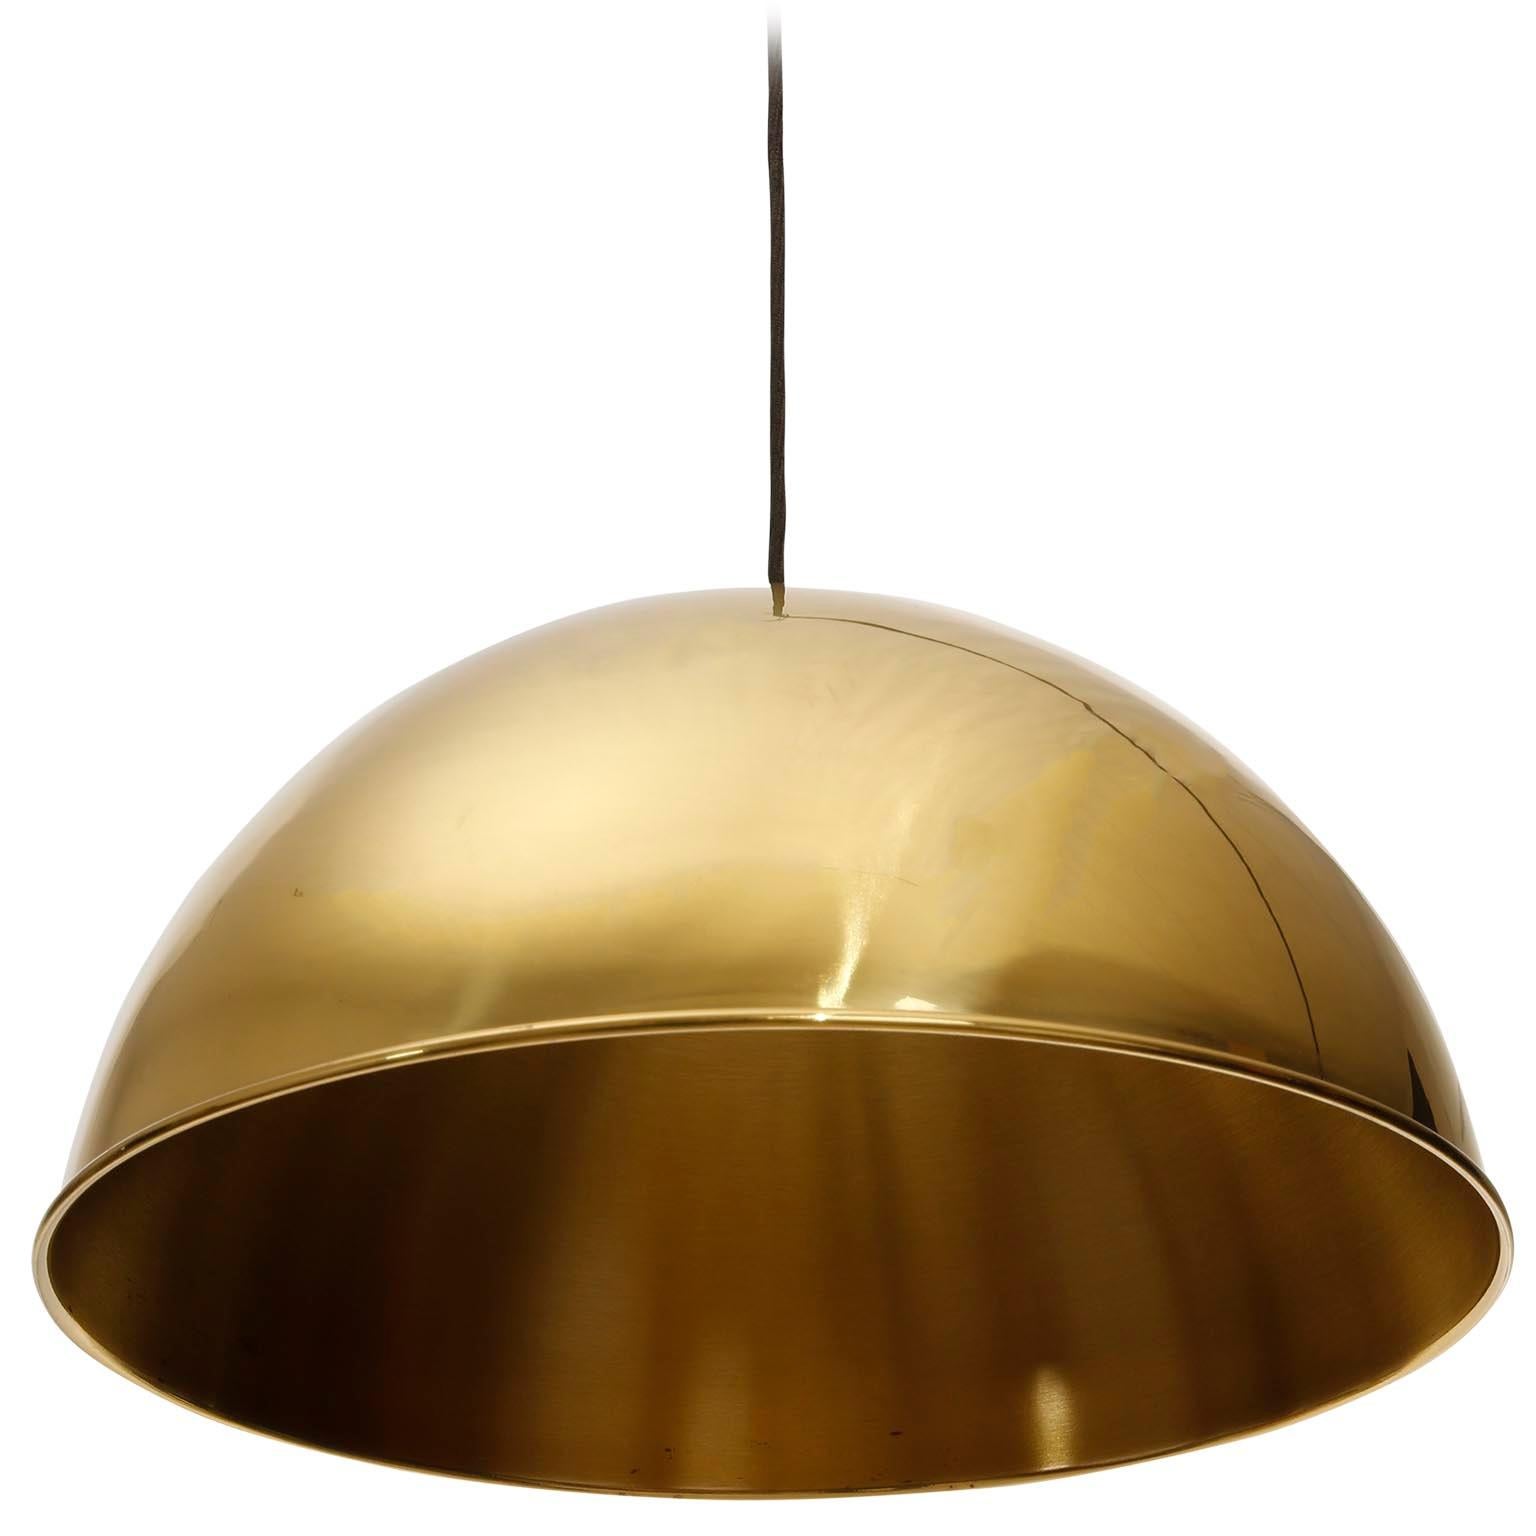 Patinated Florian Schulz Dome Pendant Light, Brass Counterweight Counter Balance, 1970